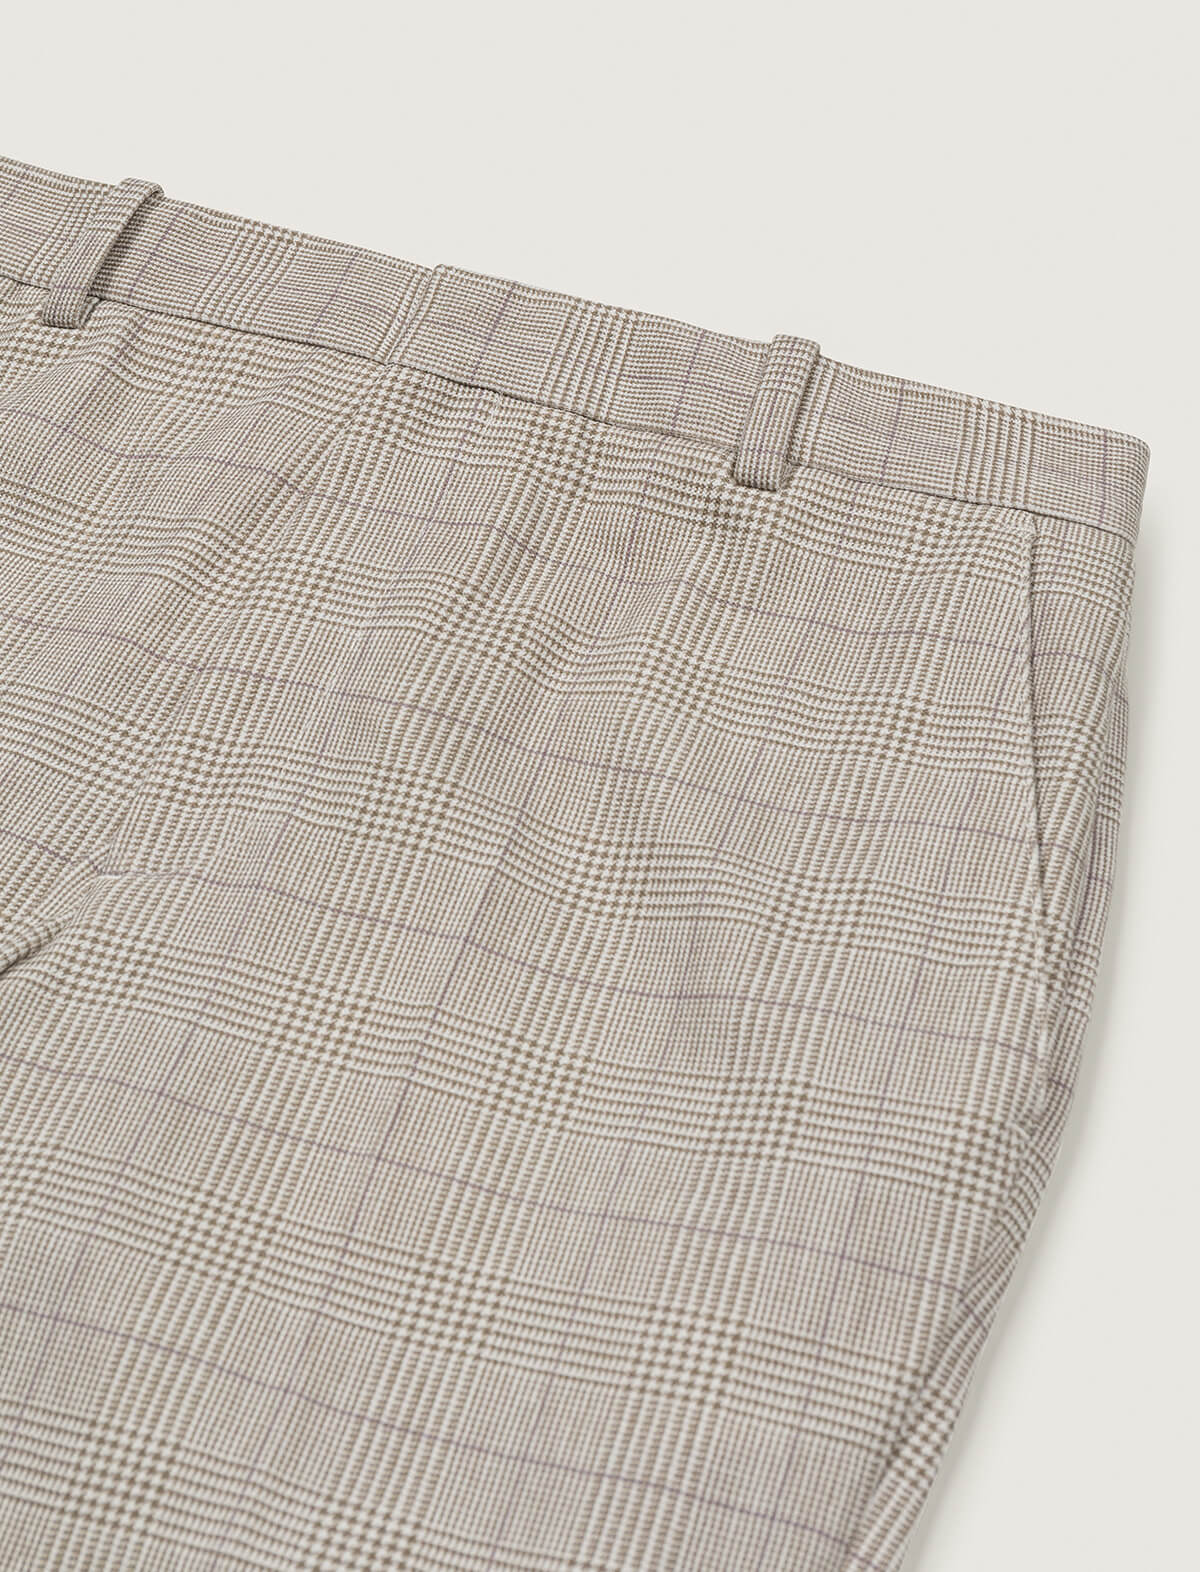 CIRCOLO 1901 Printed Piquet Trousers in Sabbi Wales | CLOSET Singapore